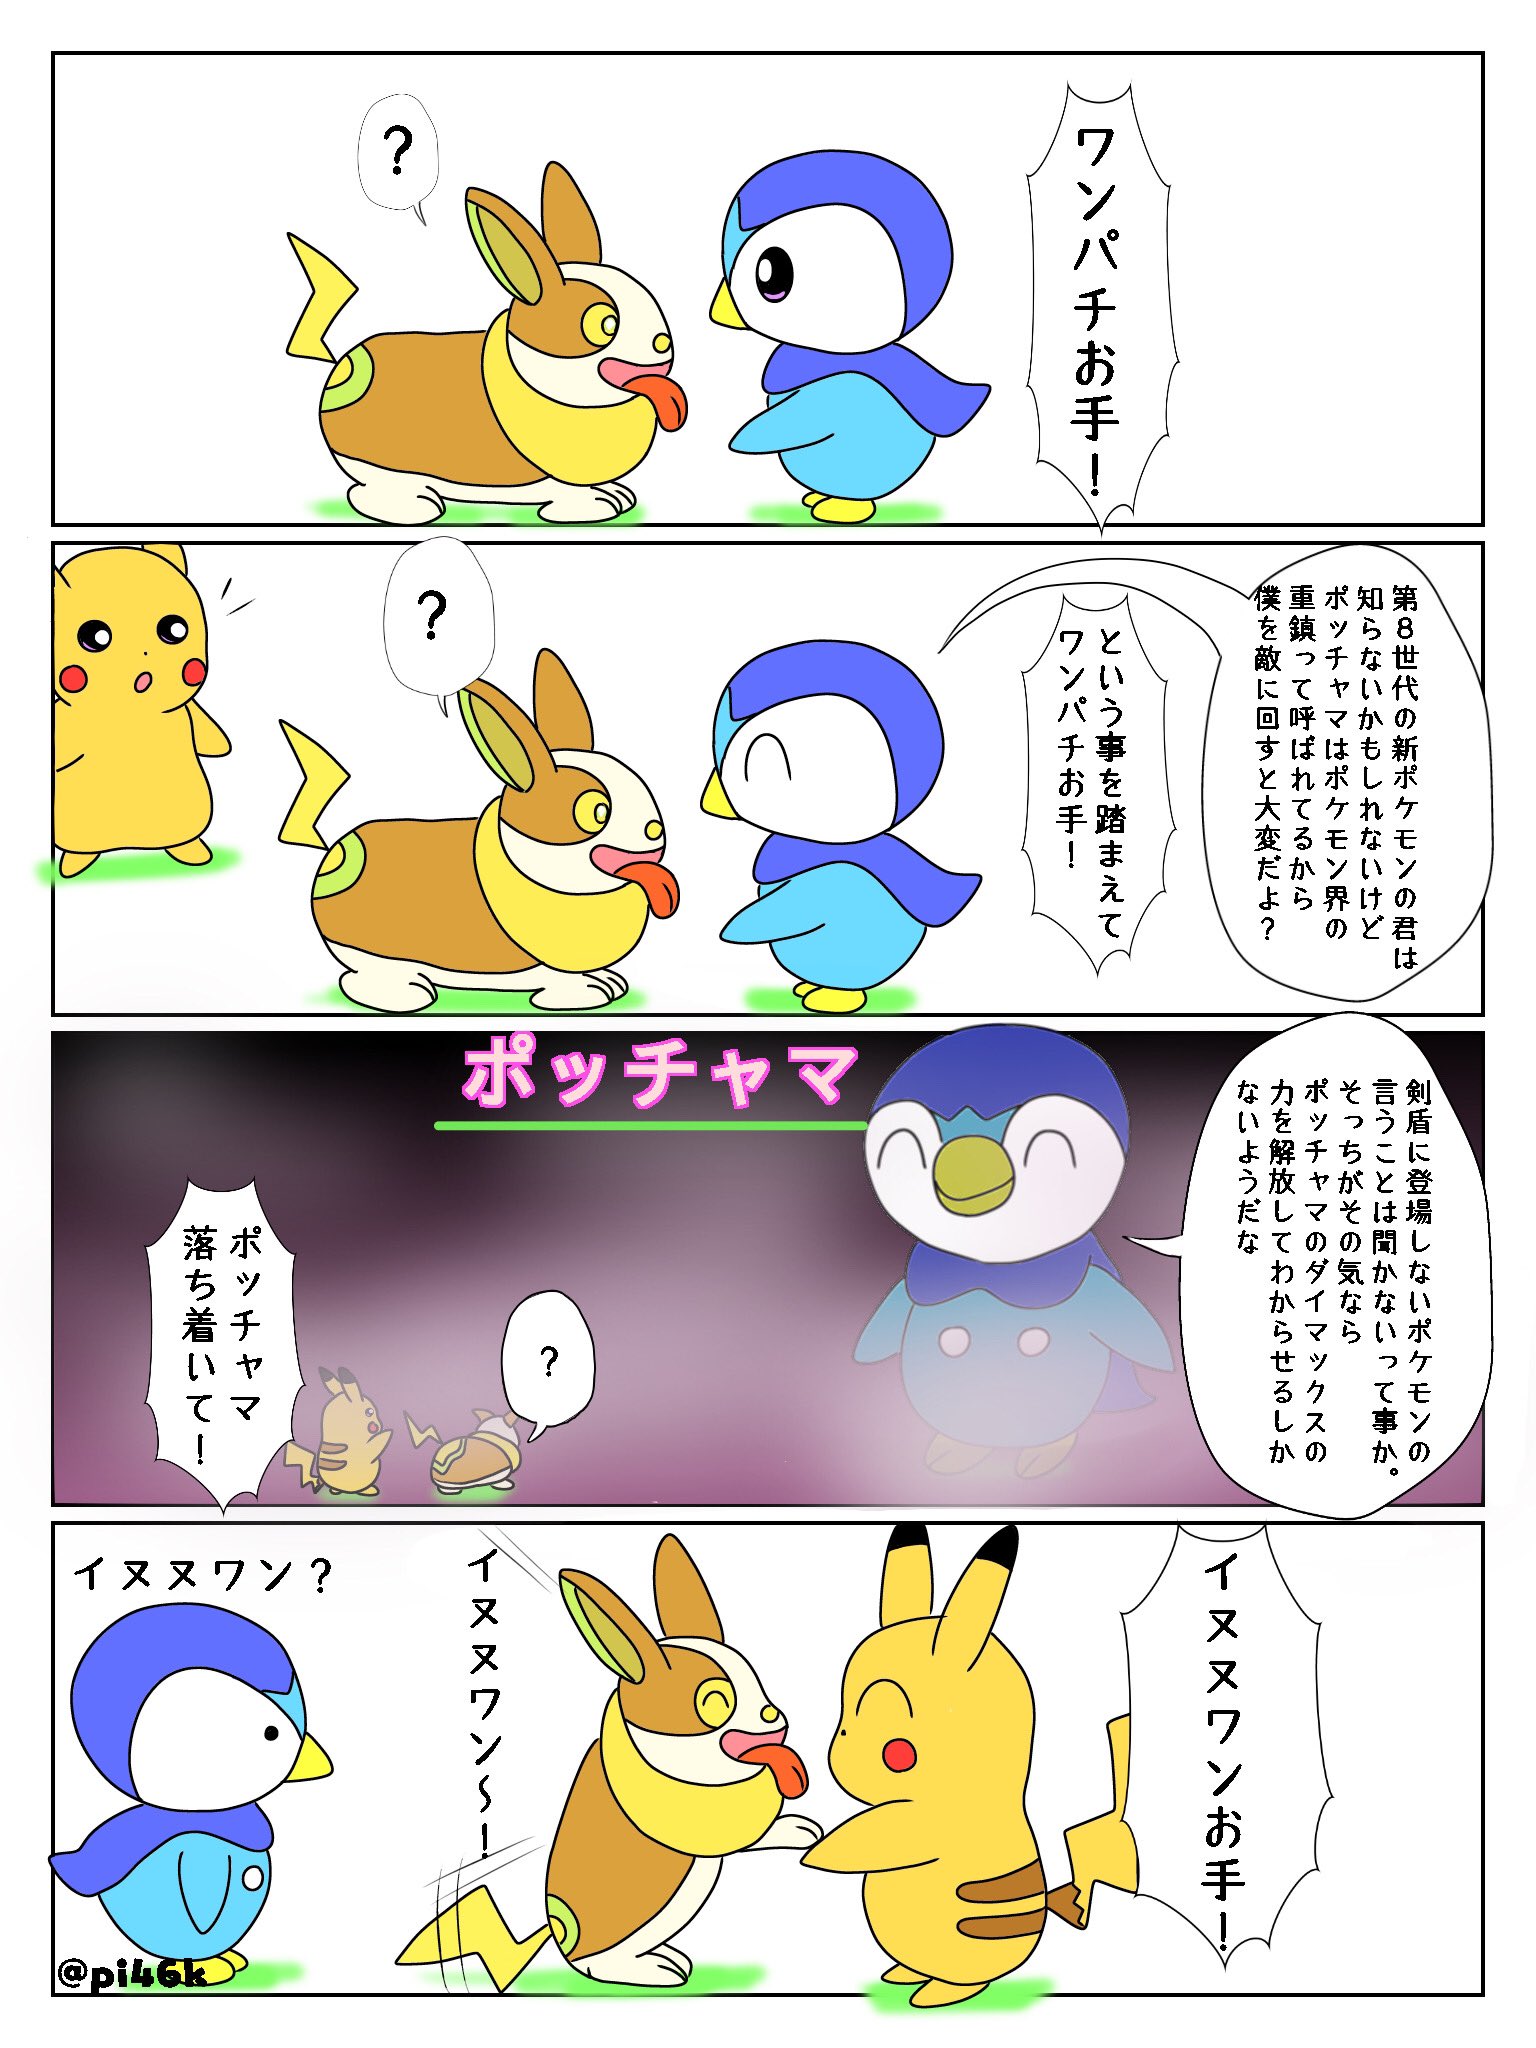 Re ピカチャマ46 Twitterissa 年明け最初のイラストはポッチャマとピカチュウとワンパチの漫画です T Co Uzcdvioze6 Twitter